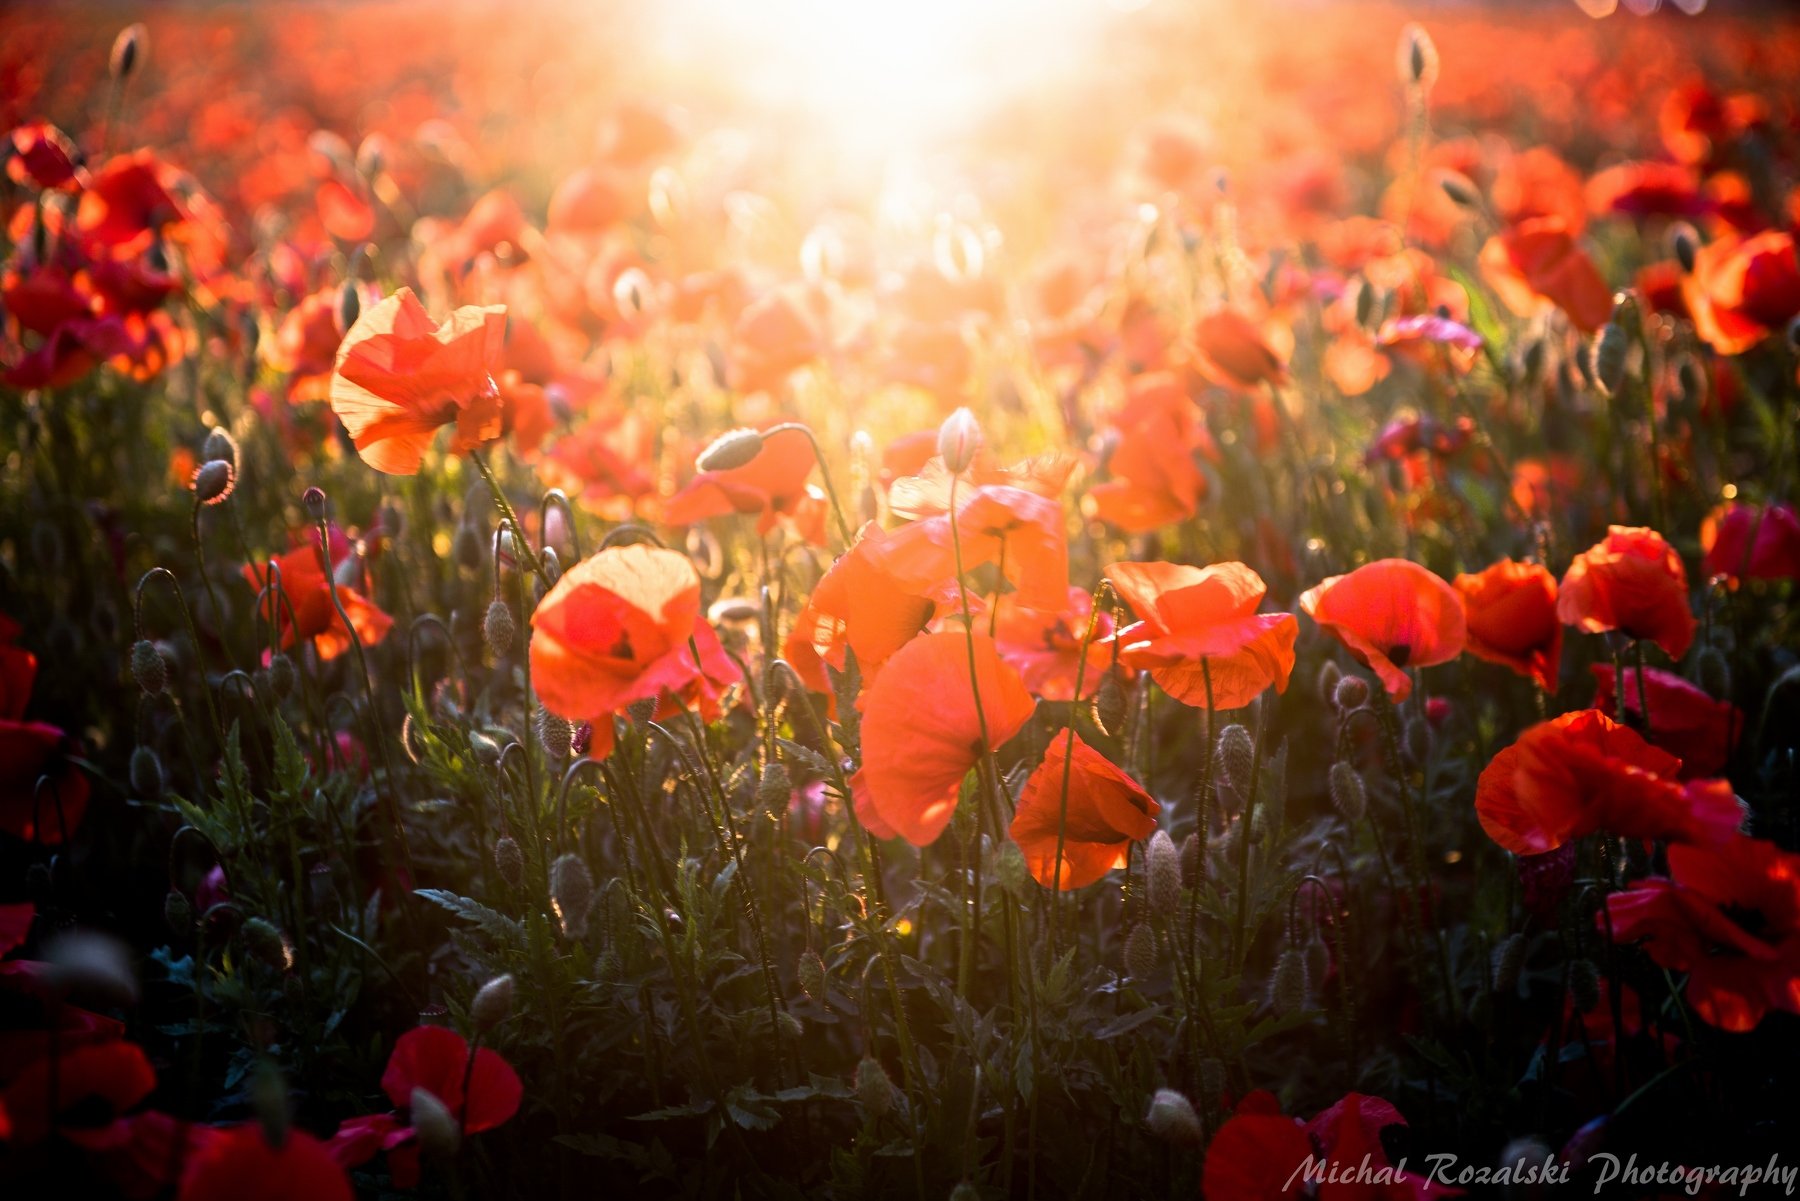 poppies, ,meadow, ,flowers, ,sunlight, ,light, ,nature, ,spring, ,season,, Michal Rozalski